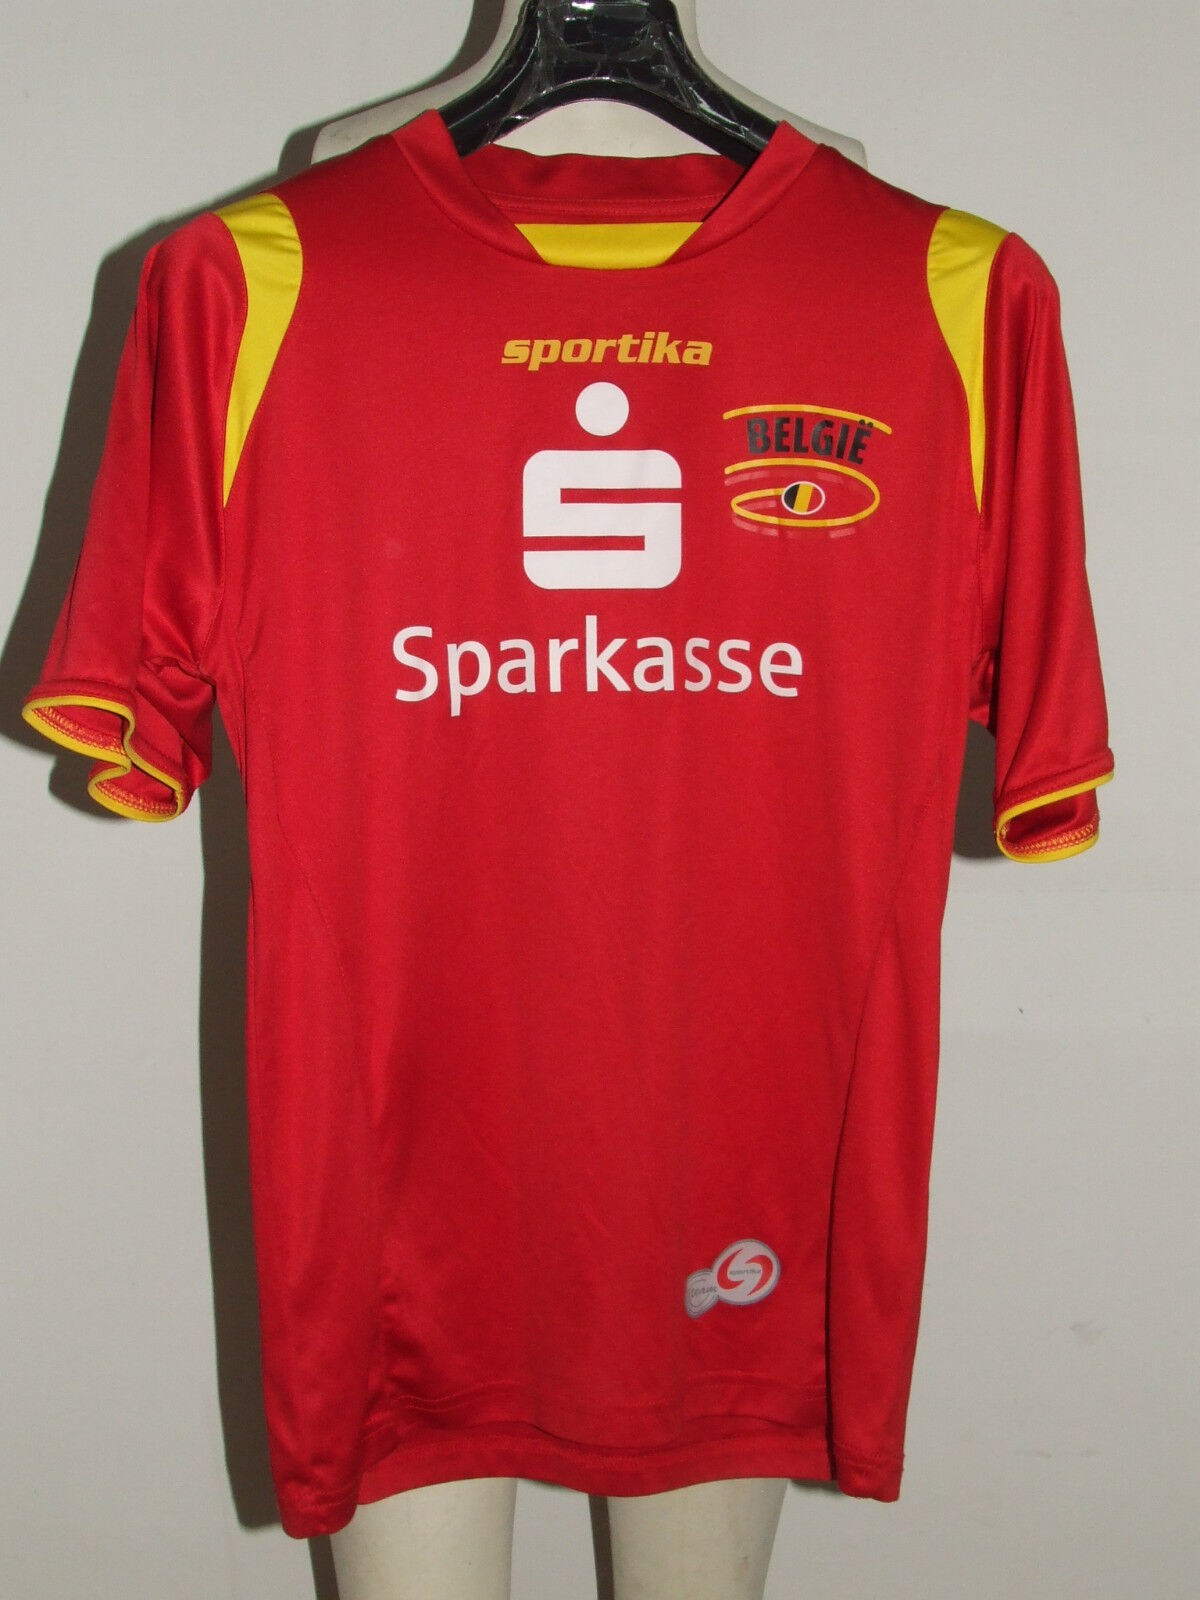 Shirt Rare Max 67% OFF Volleyball Sport Size M Belgium